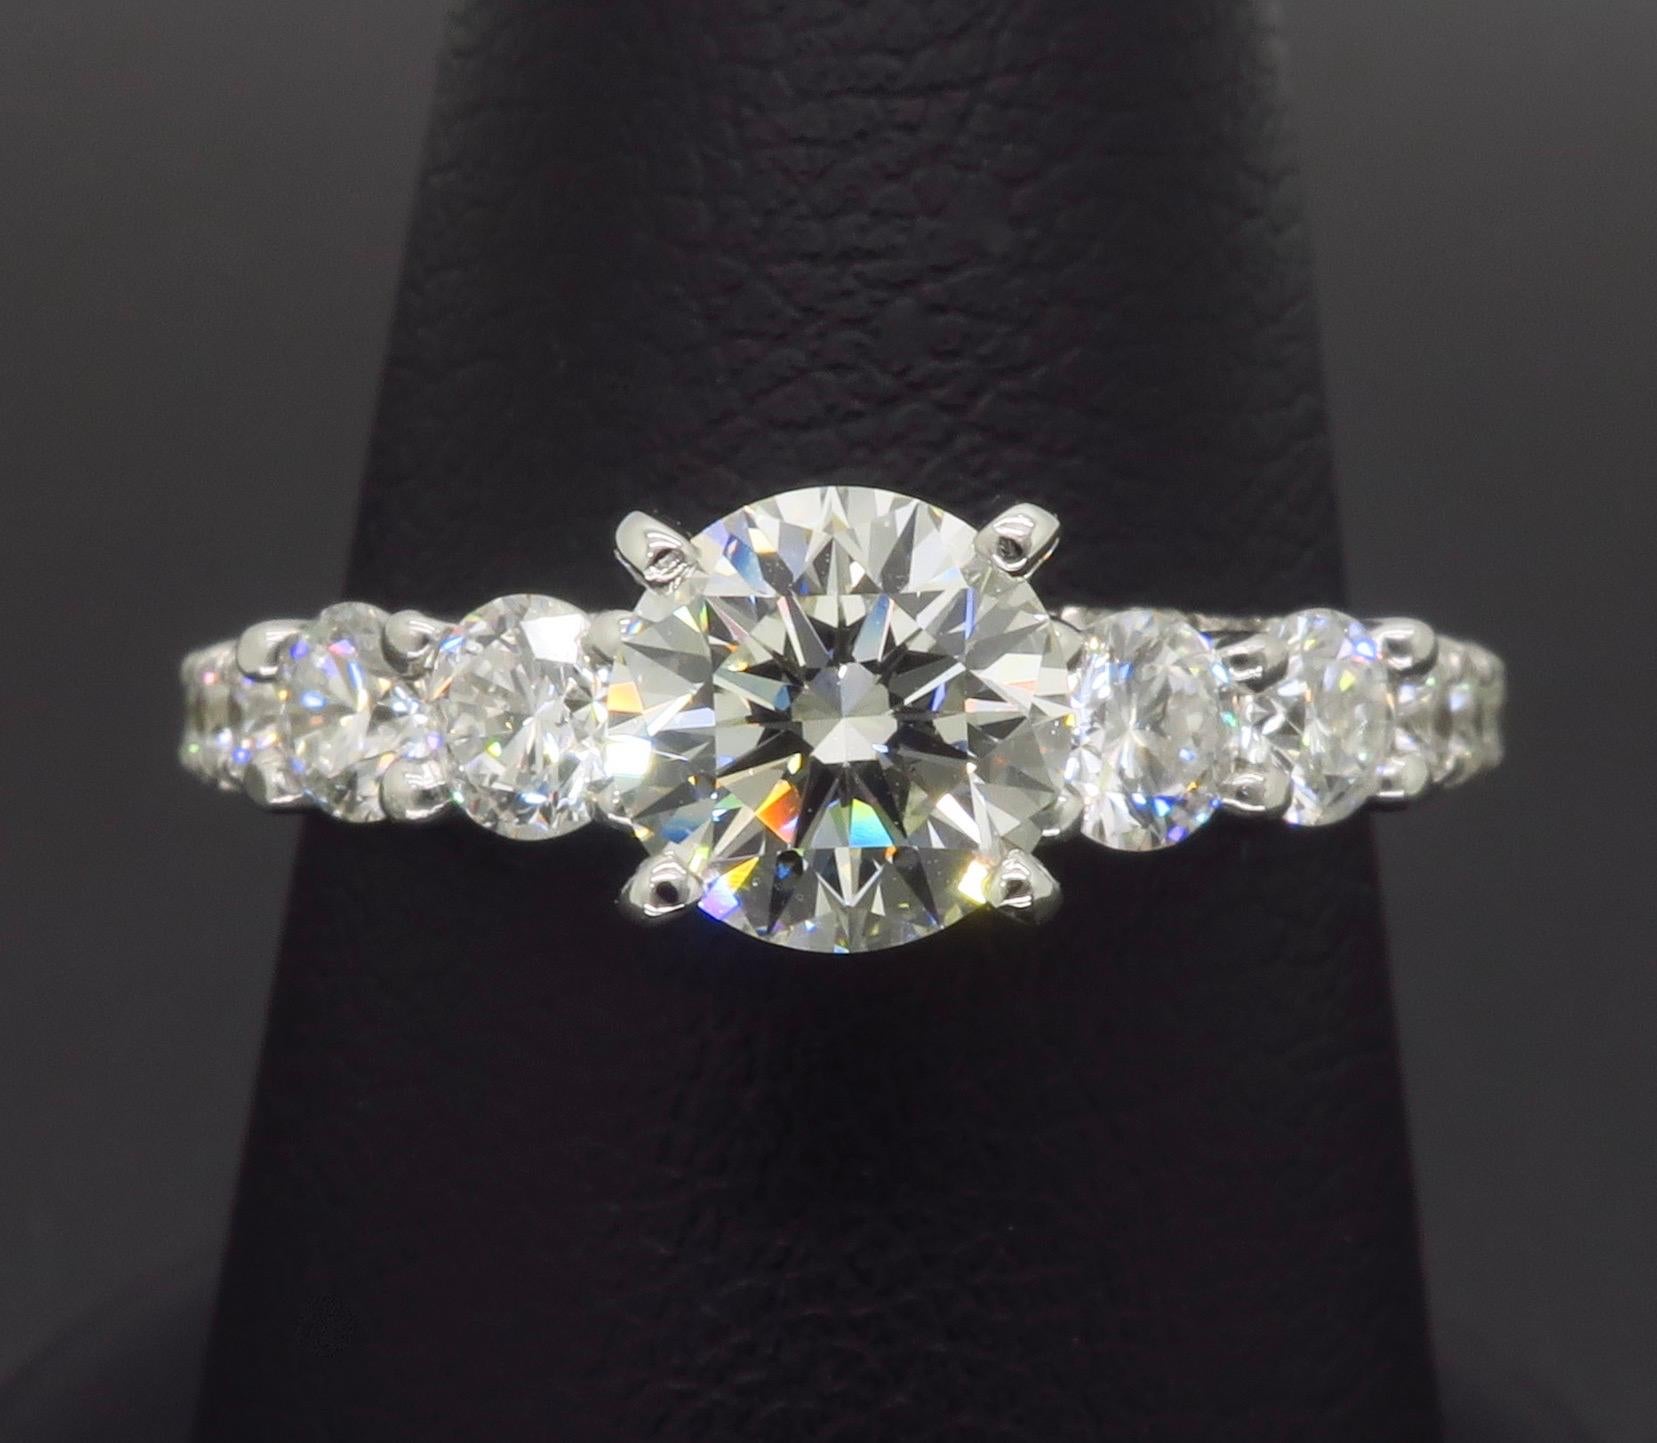 Certified Diamond engagement ring featuring a beautiful diamond encrusted gallery. 

Center Diamond Carat Weight: .86CT
Diamond Cut: Round Brilliant Cut
Center Diamond Color: I
Center Diamond Clarity: VS1
Certification: IGI - 33253891 - Diamond is